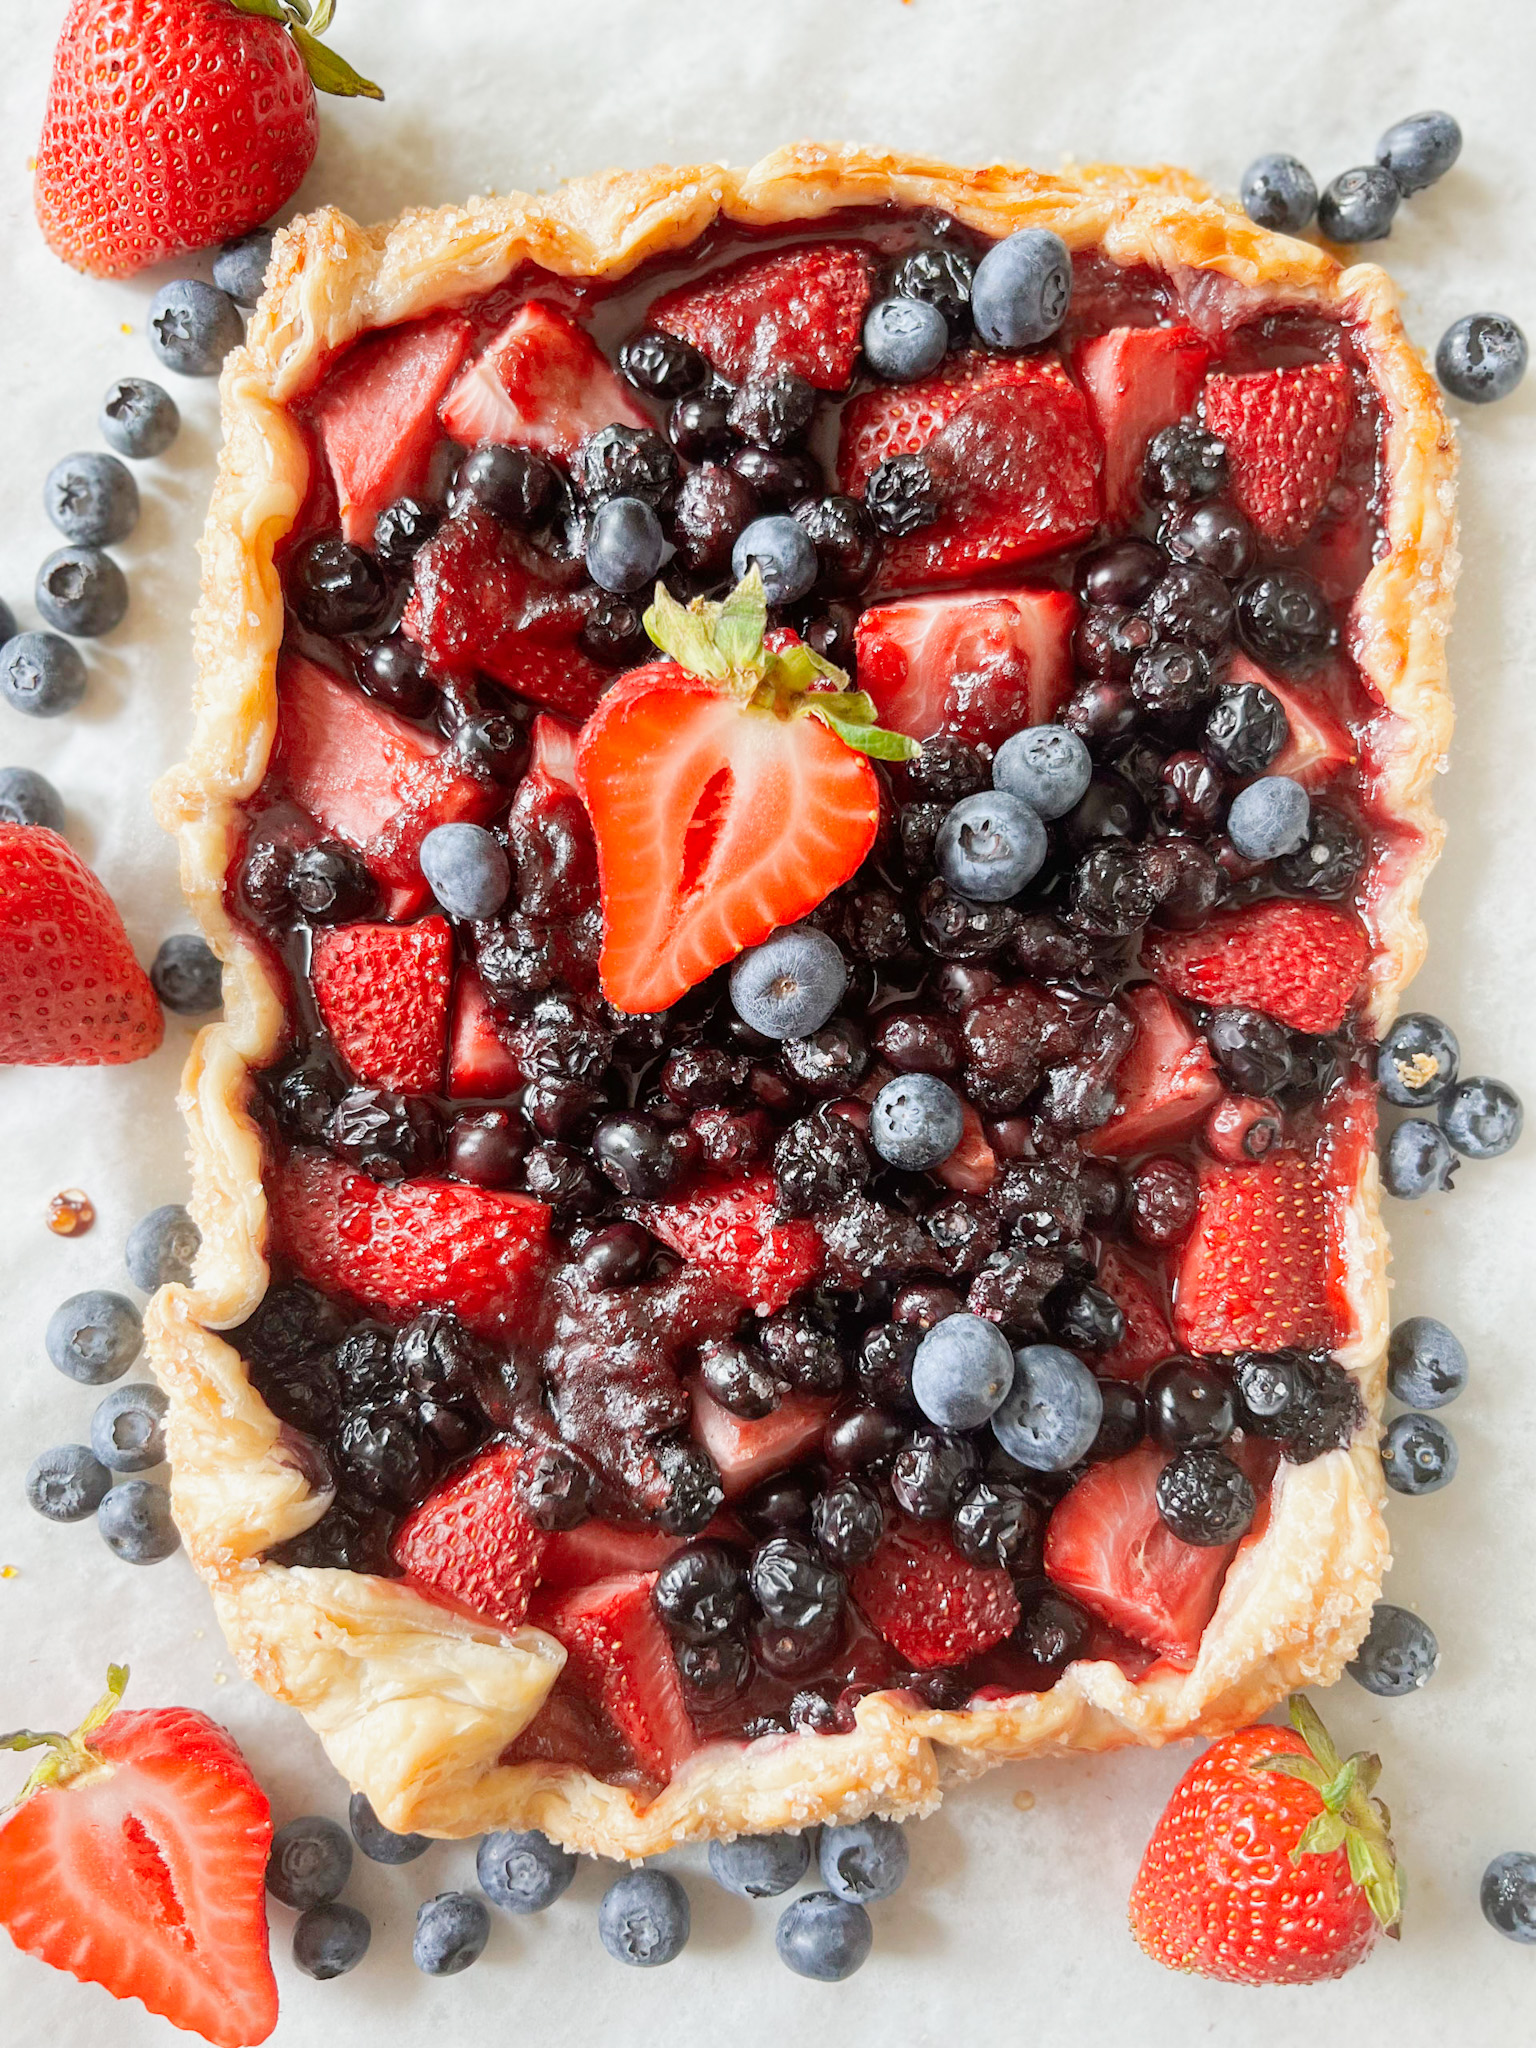 baked vegan fruit tart with blueberries and strawberries